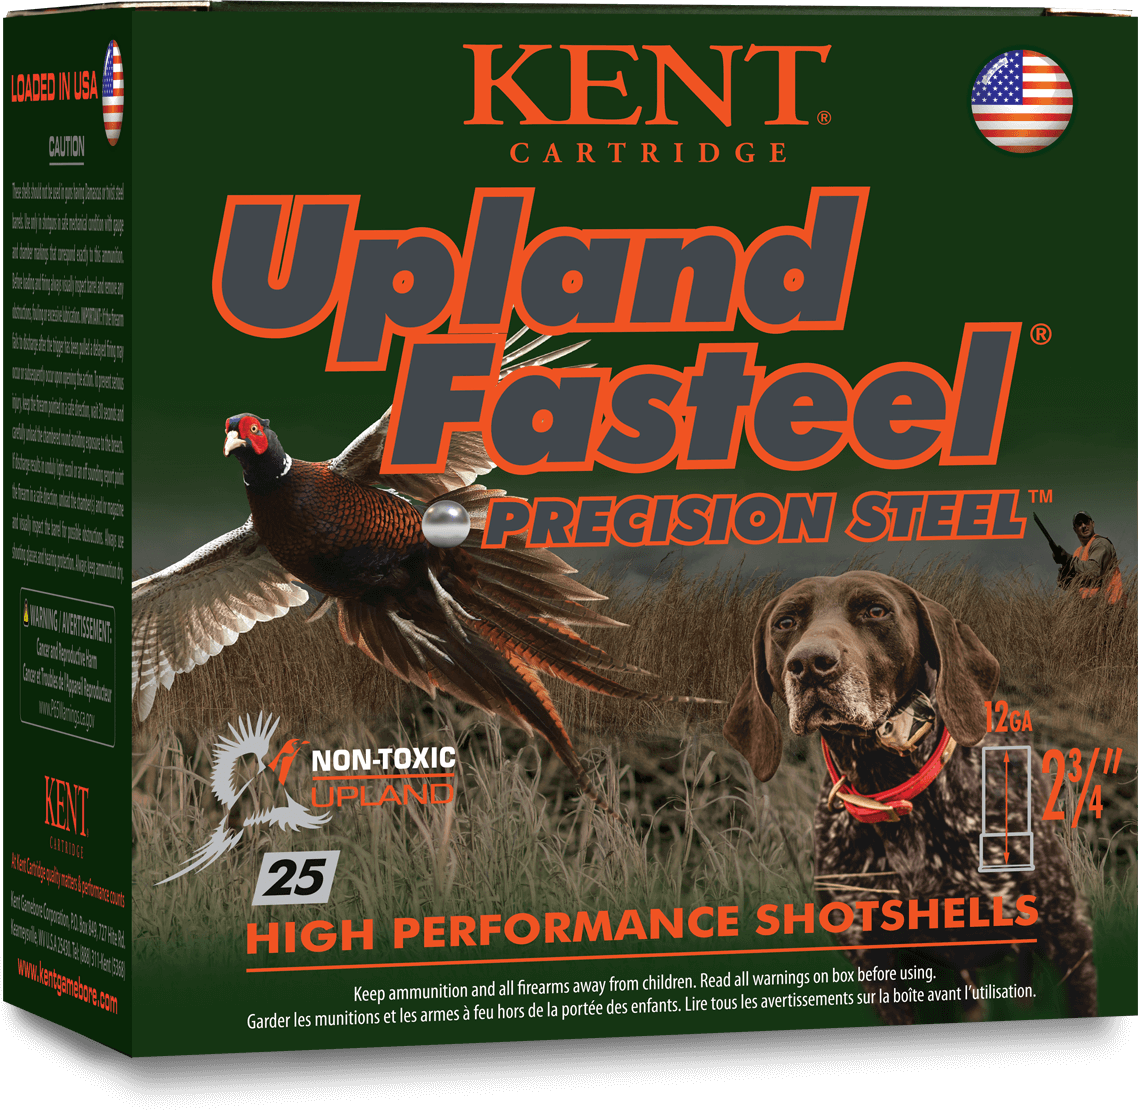 Kent Cartridge Upland Fasteel 12 Gauge 2.75In 6 Shot Shotgun Ammunition |  21% Off Free Shipping Over $49!